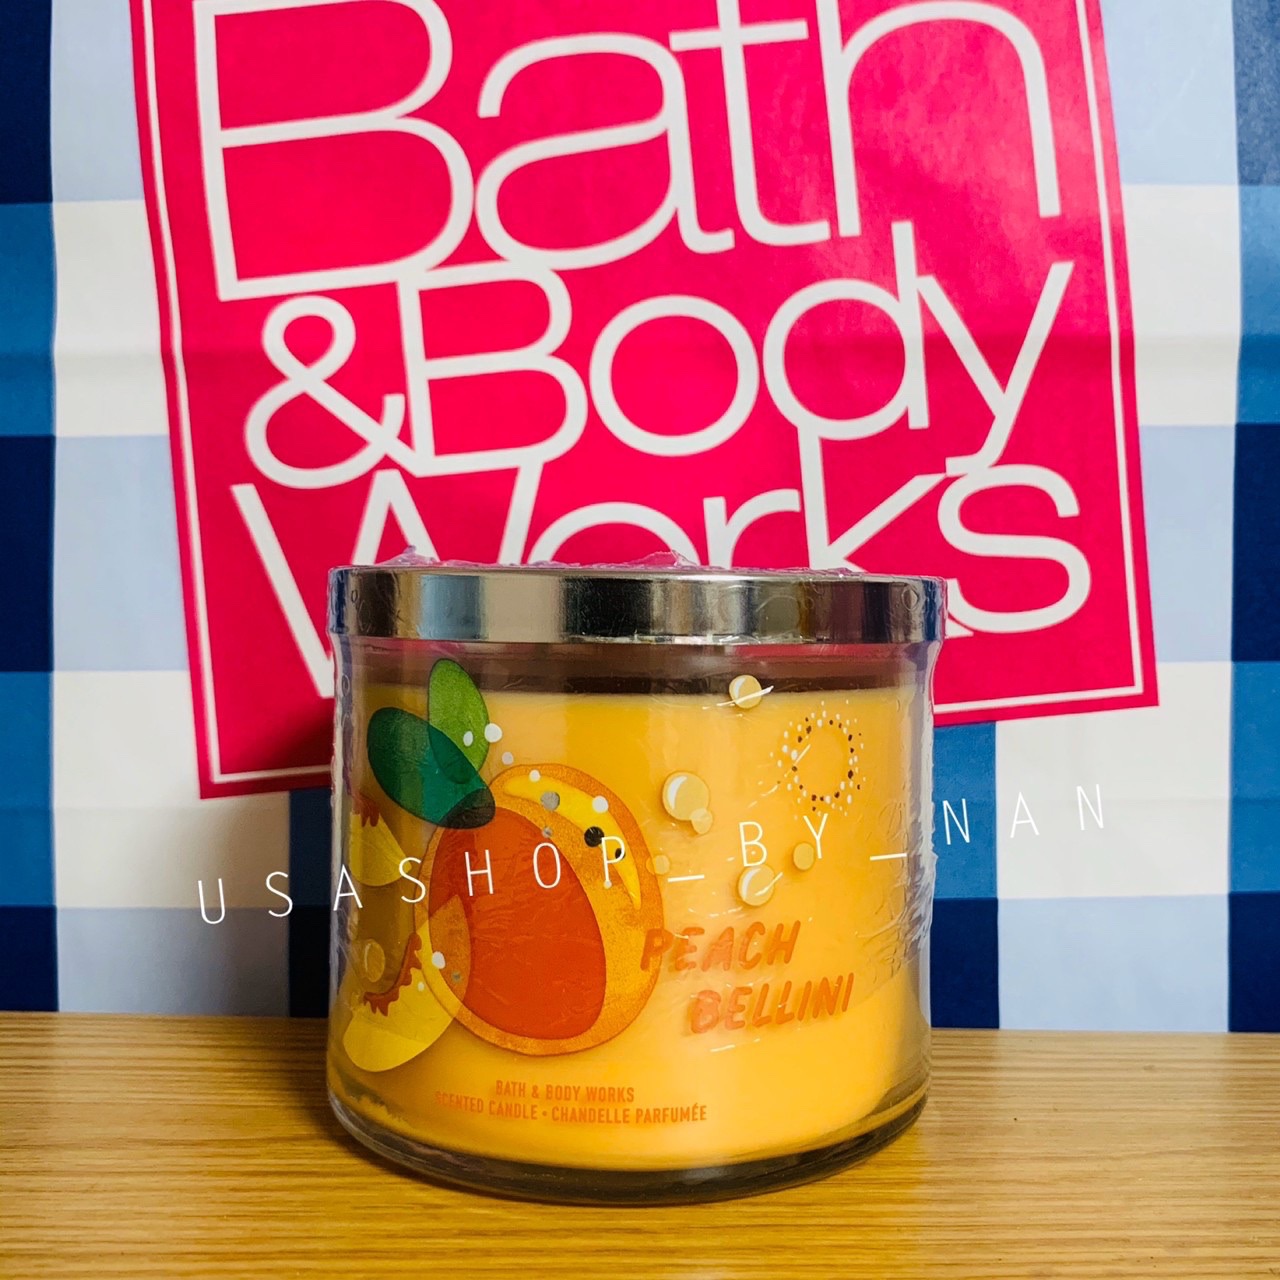 Bath & Body Works Peach Bellini 3 Wick Scented Candle 14.5 oz 